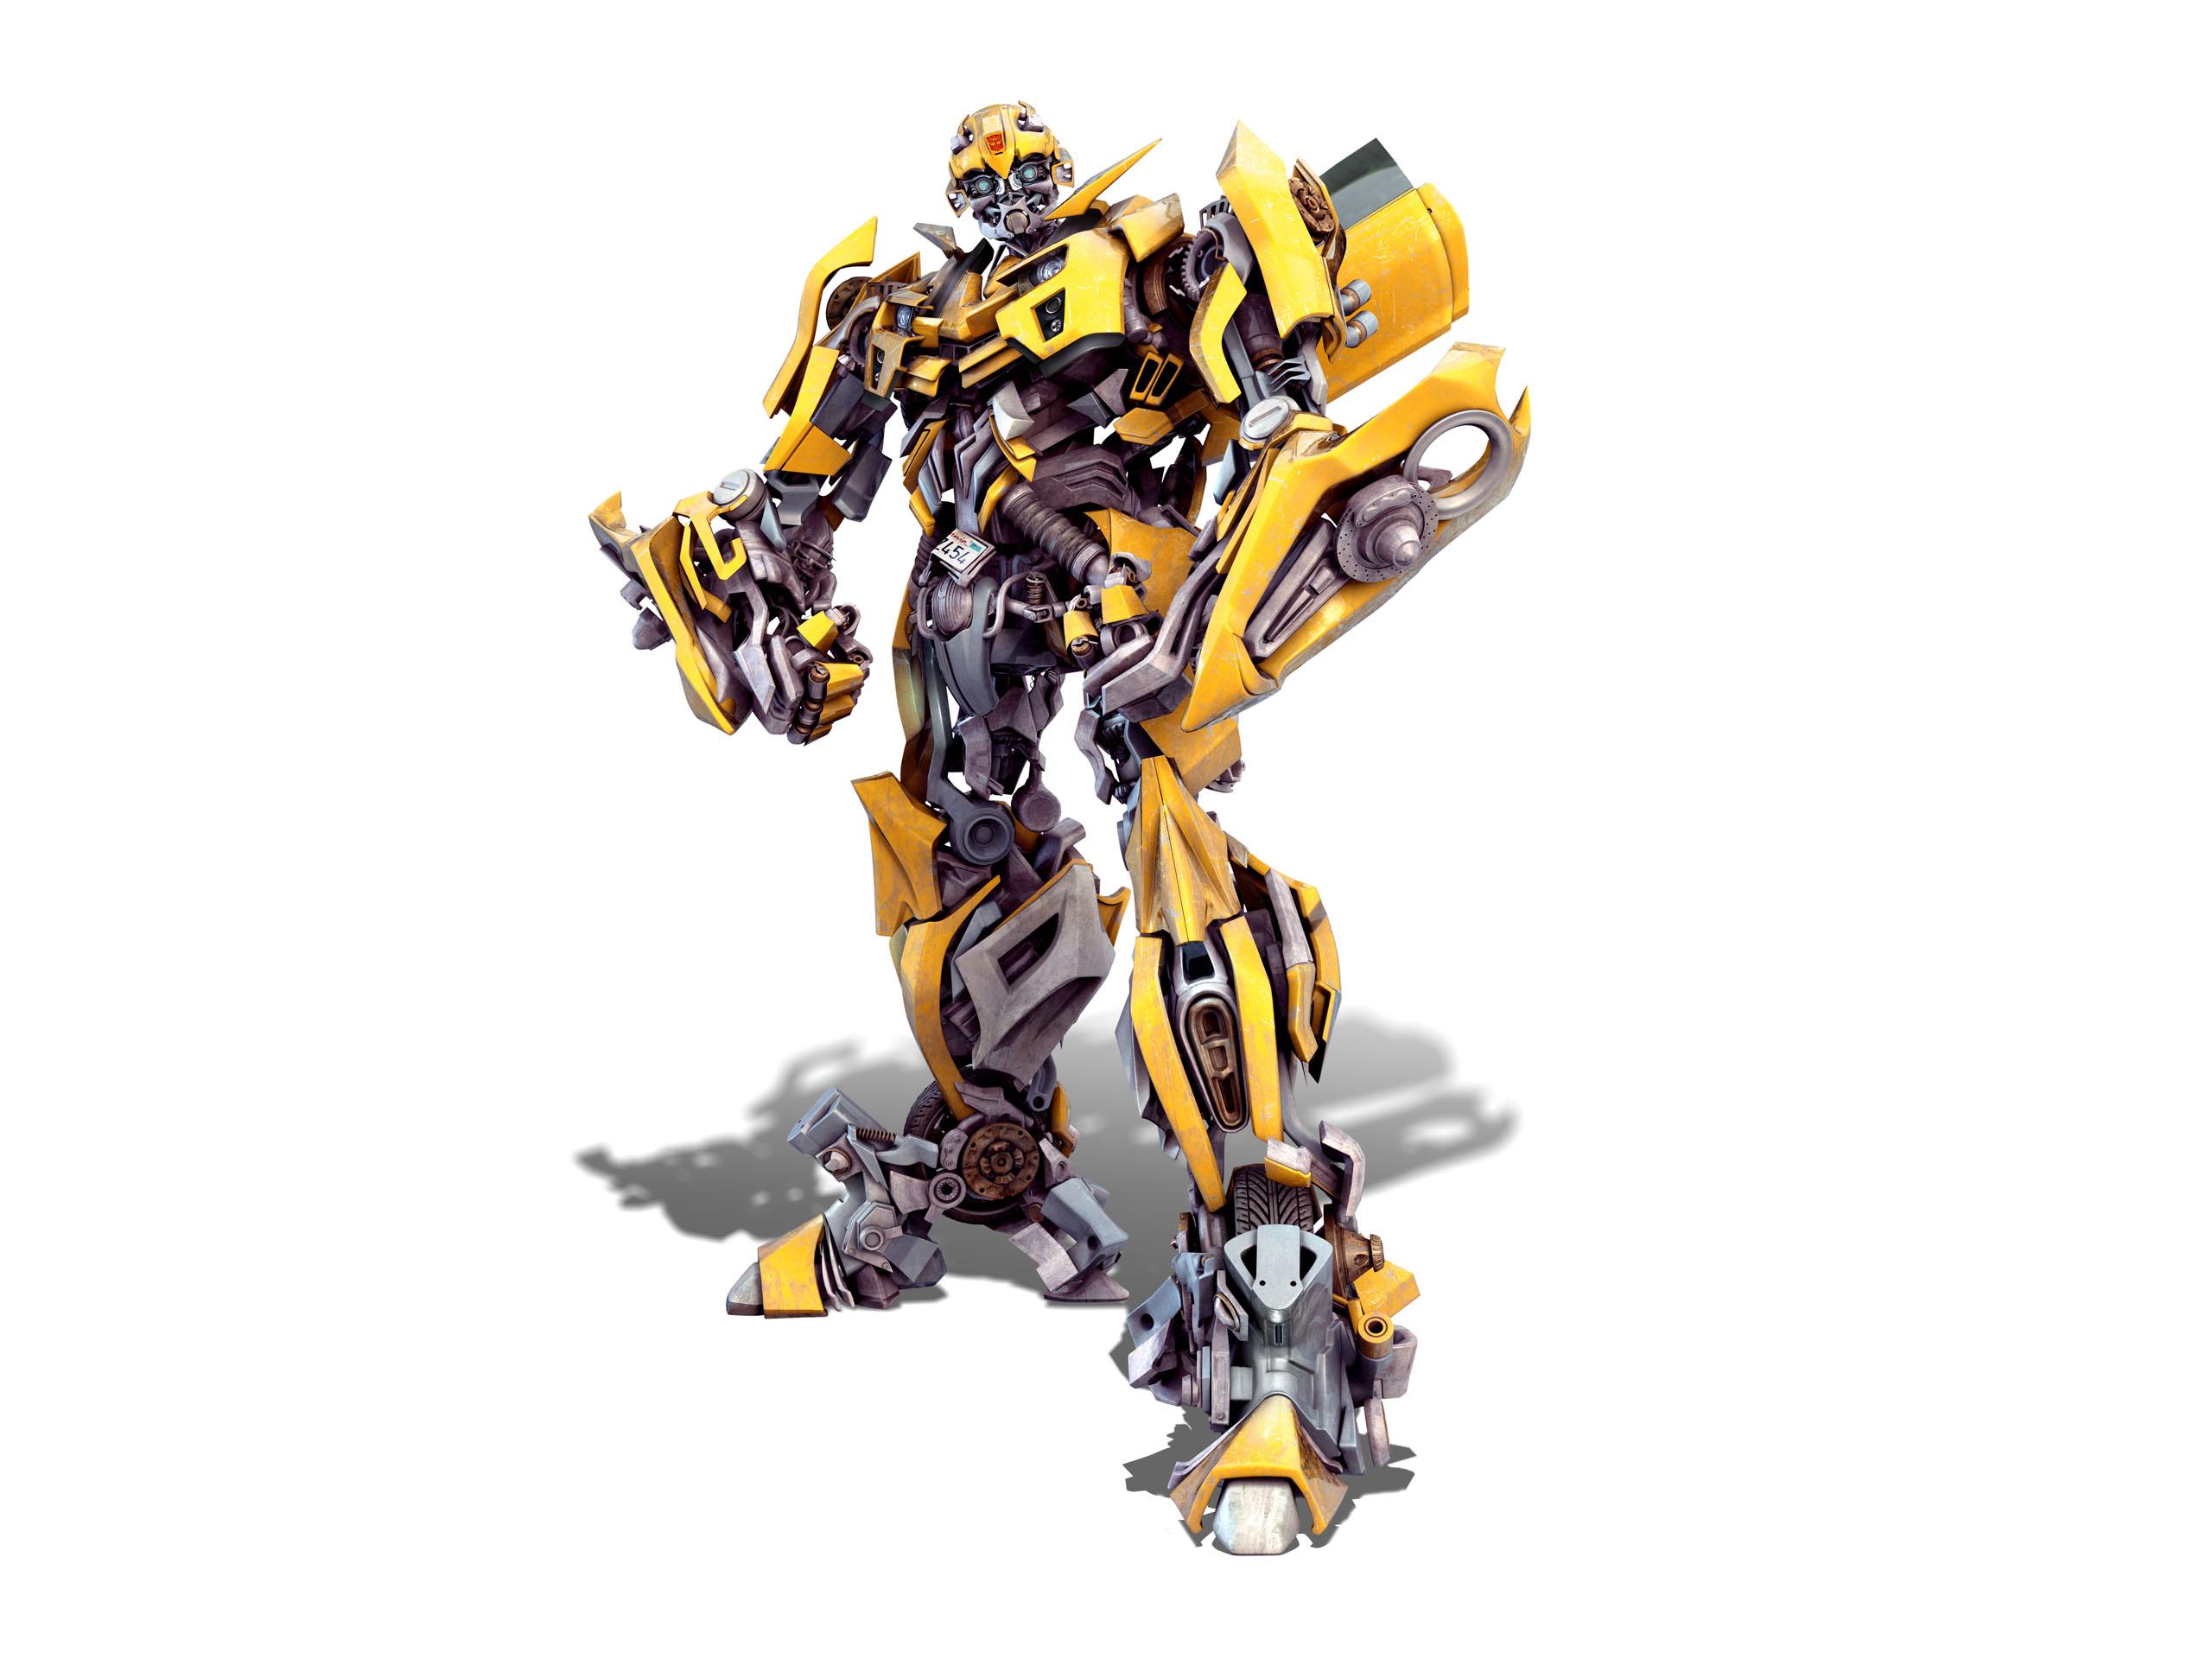 Download Cool Bumblebee Transformer Wallpaper Full HD Wallpapers